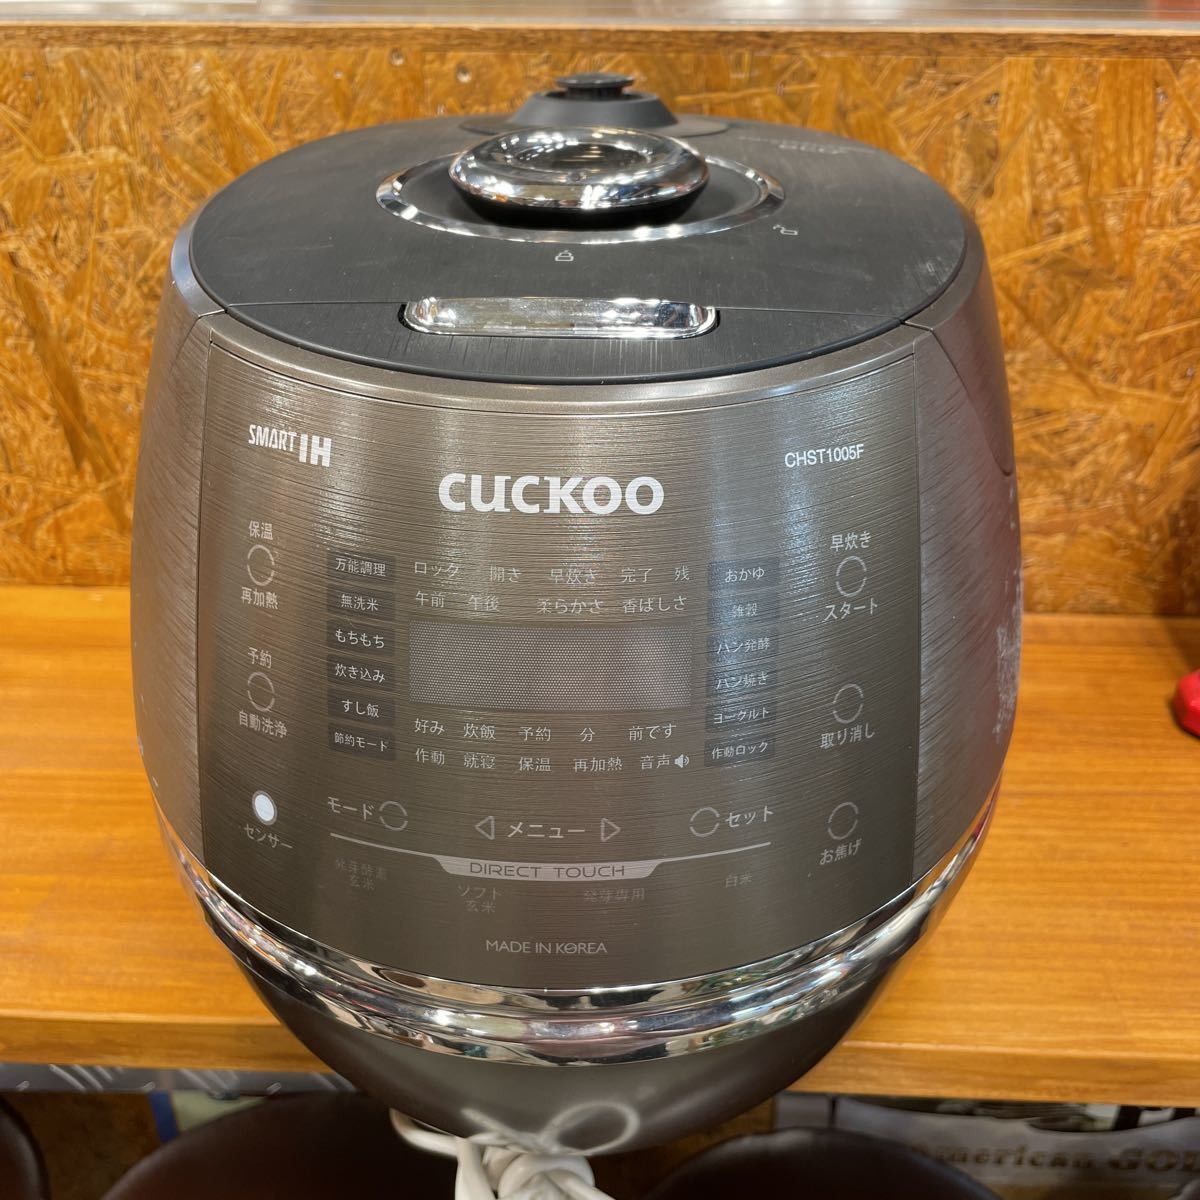 CUCKOO 炊飯器 圧力名人 クック 一升 発芽玄米炊飯器 全自動 smk